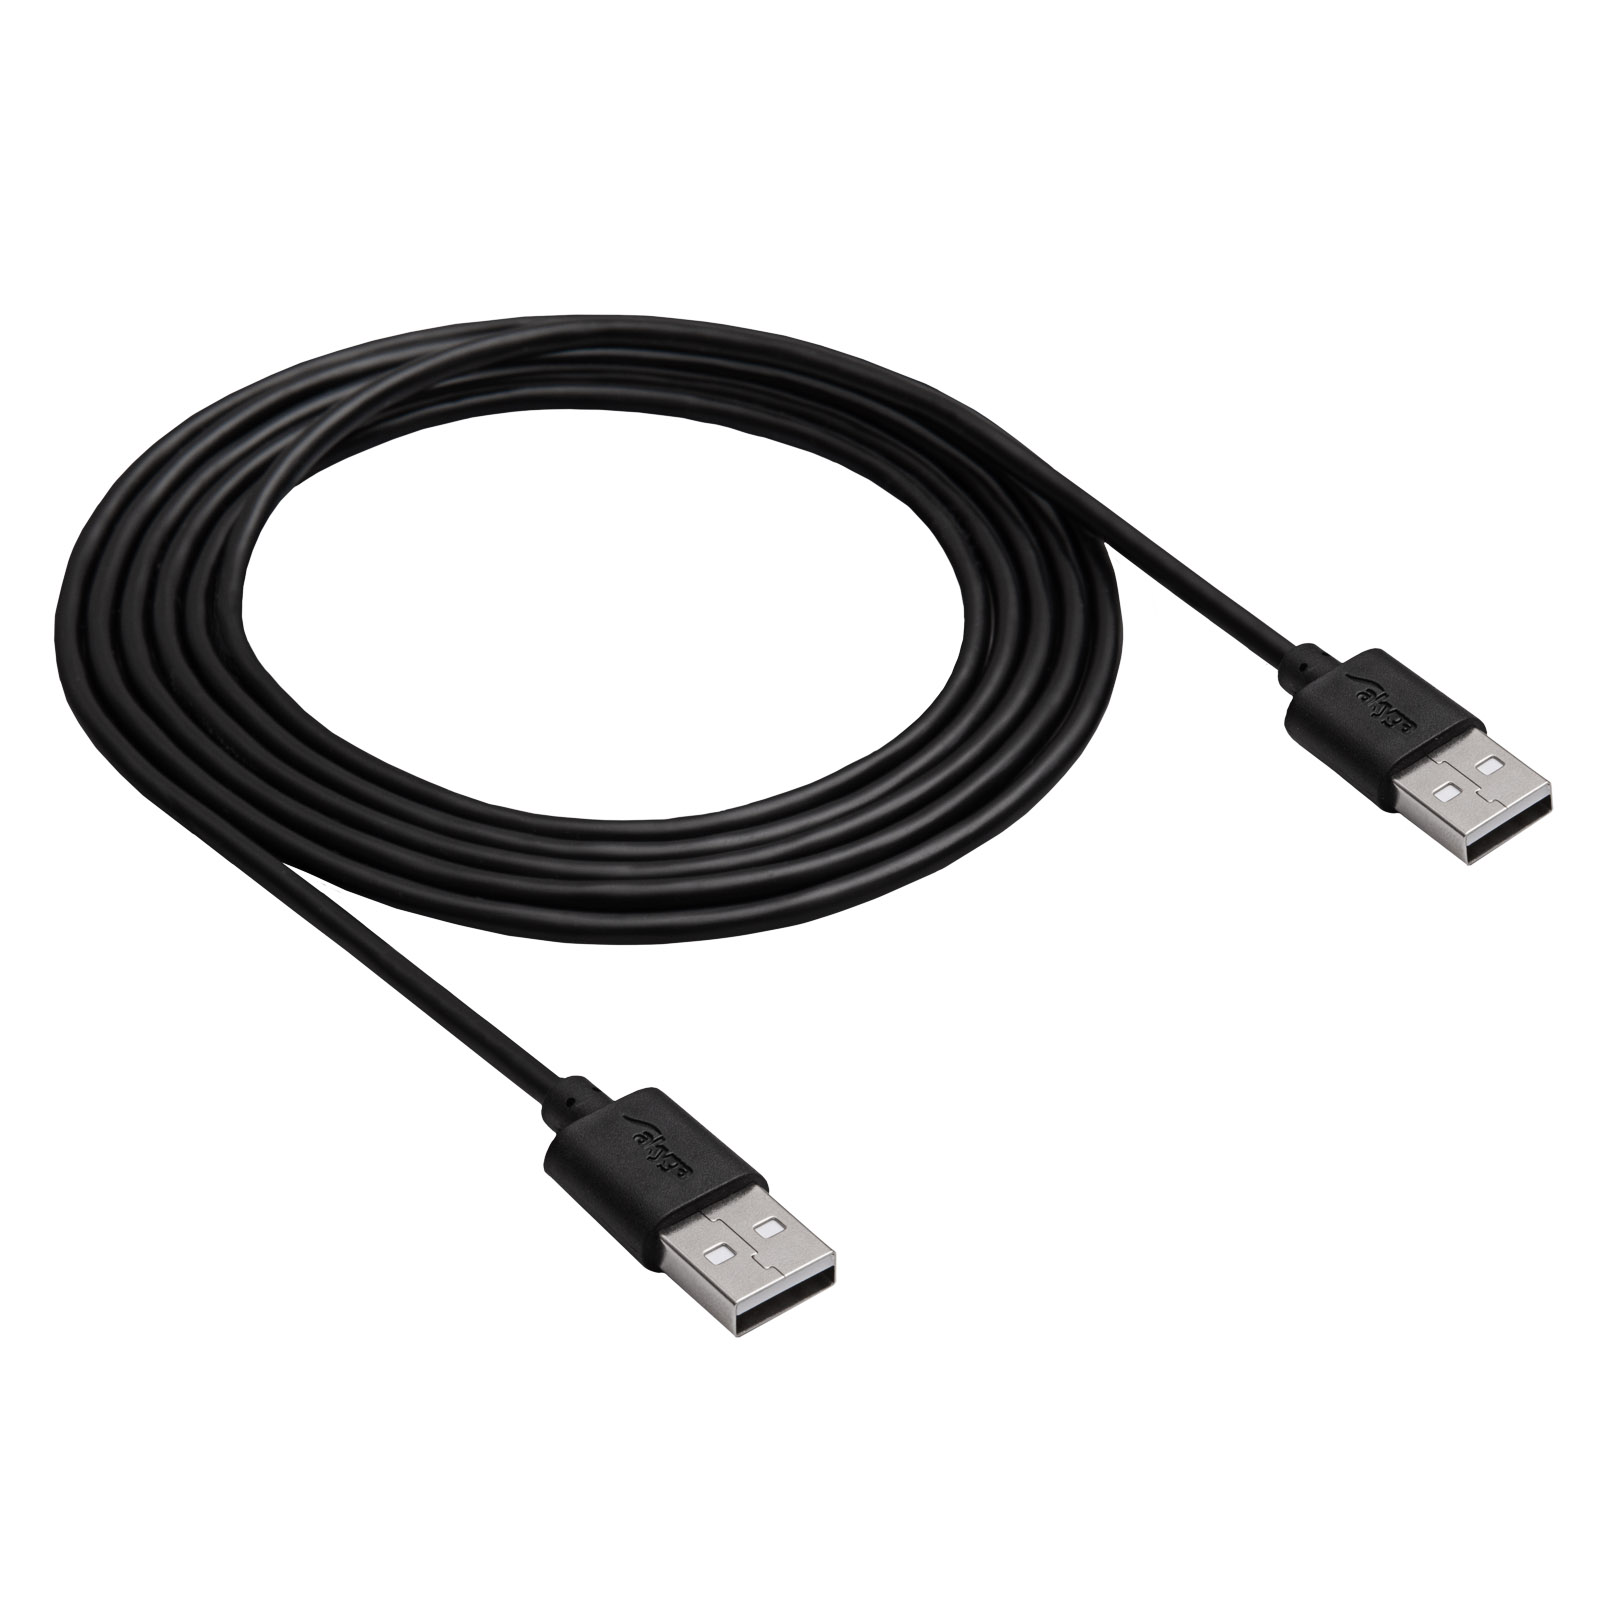 Main image Cable USB A / USB A 1.8m AK-USB-11